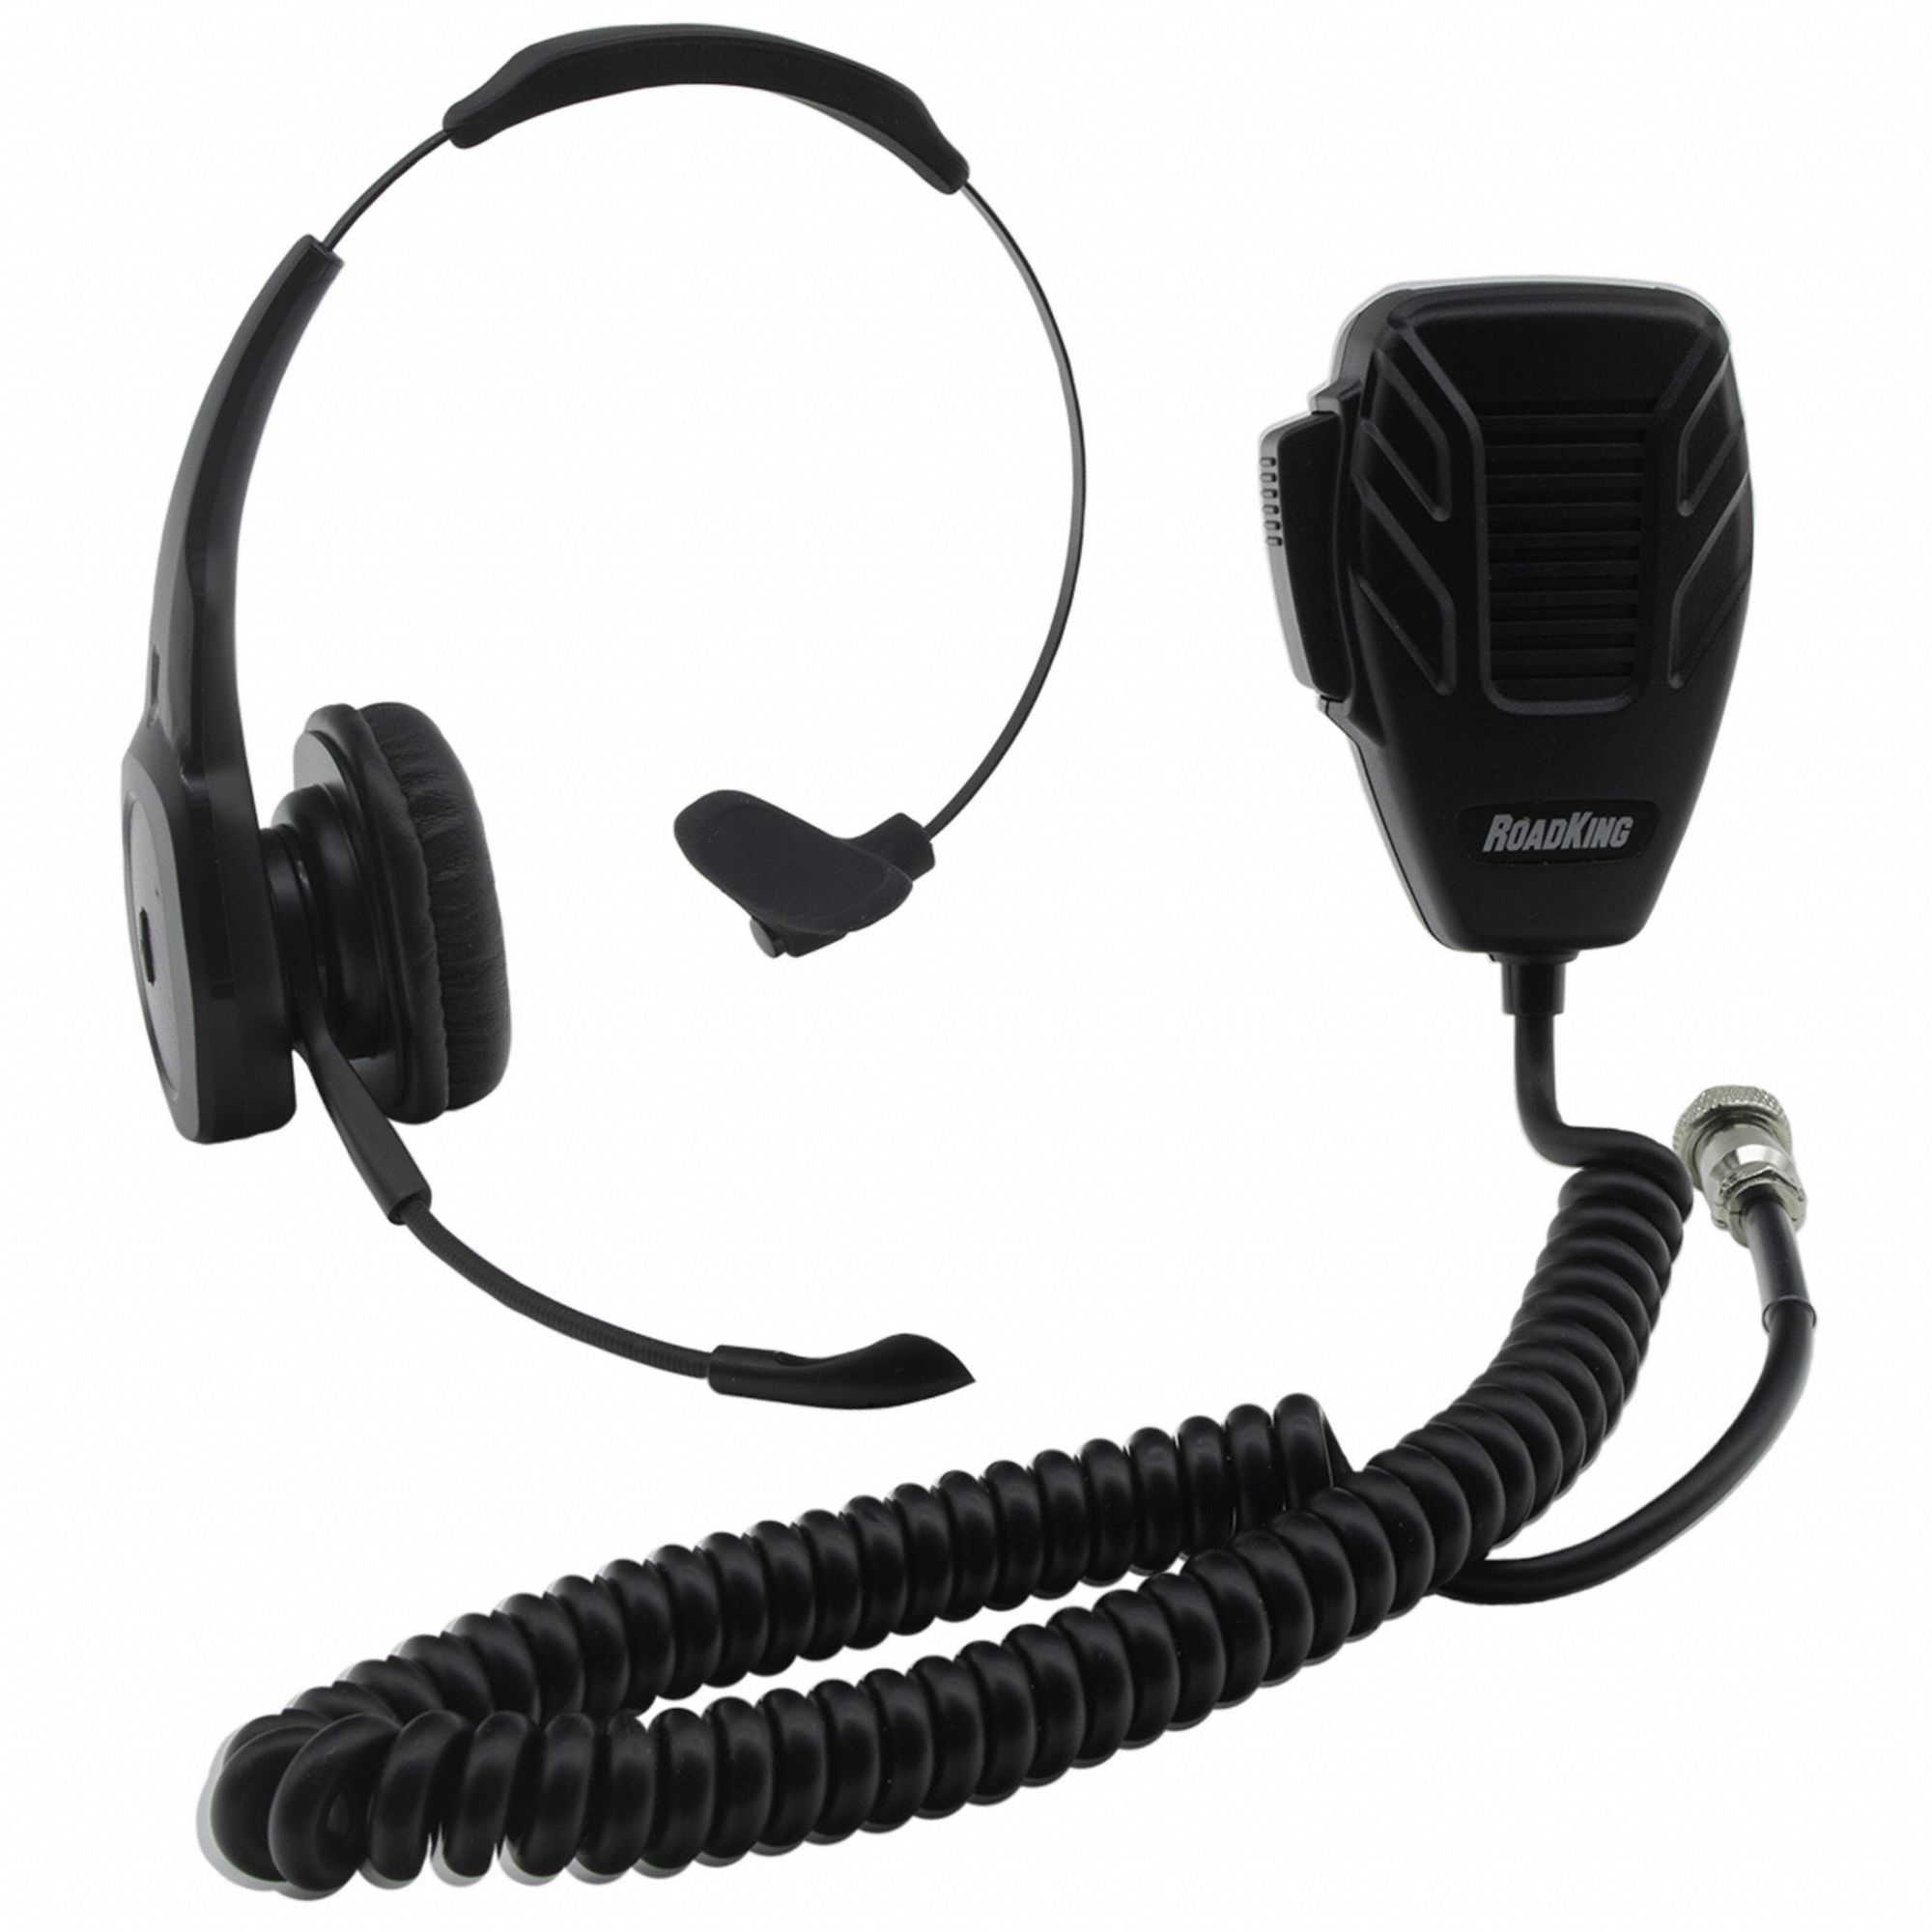 Voice-Activated Hands-Free CB Radio: Handheld, Hand Held, 26.965 - 27.405 MHz, 4-Pin